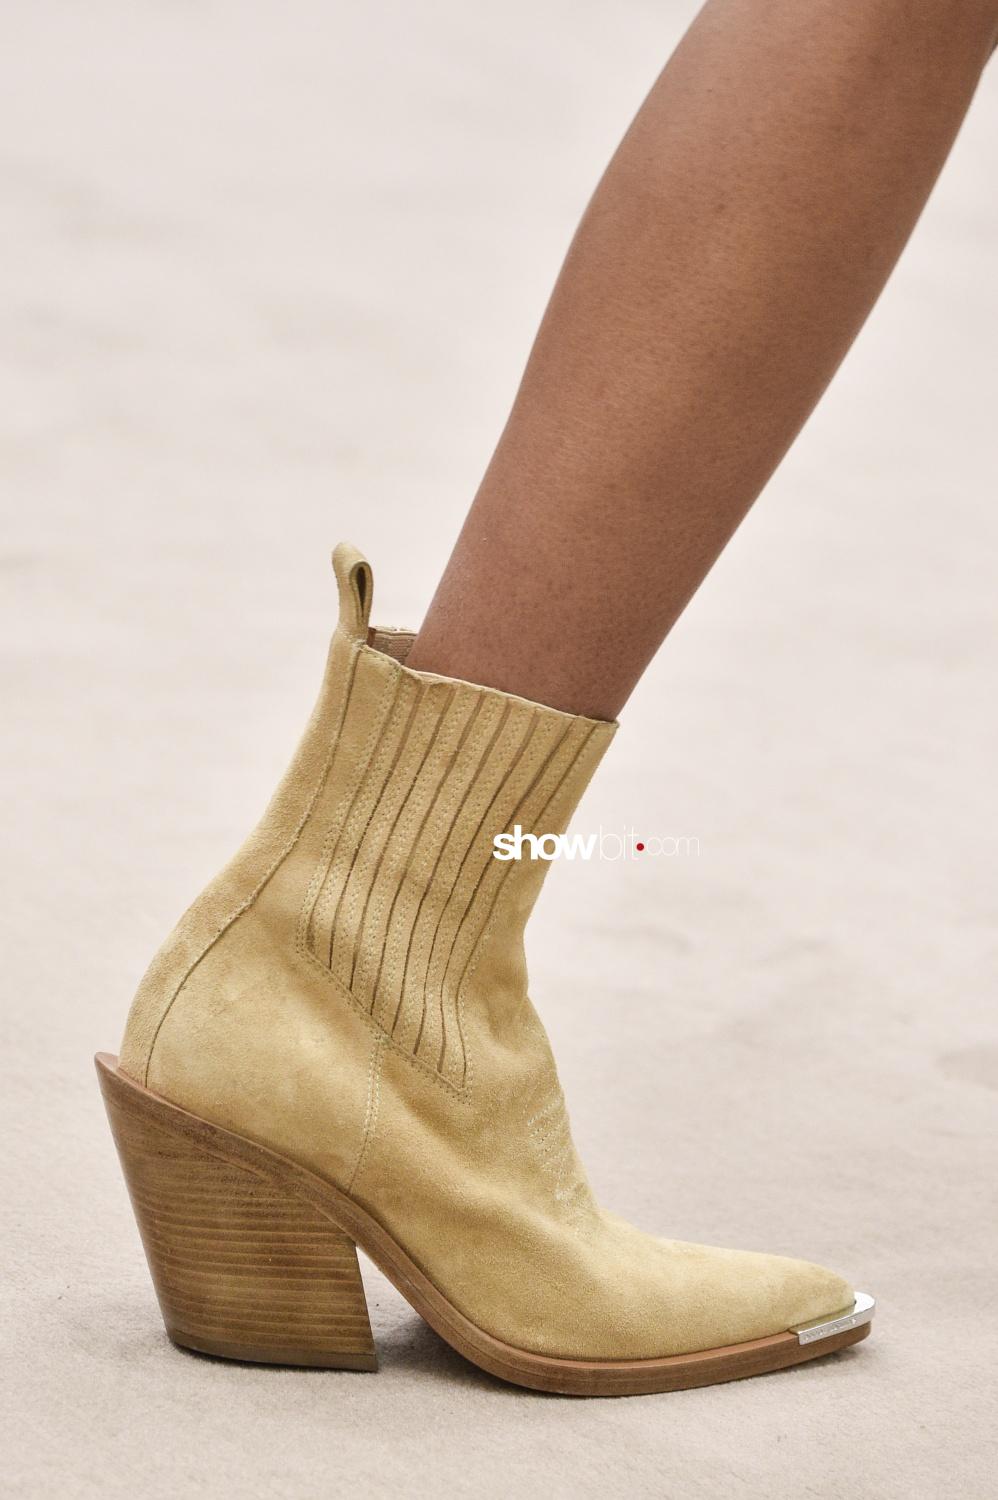 Paco Rabanne close-up shoes Woman Fall Winter 2018 Paris